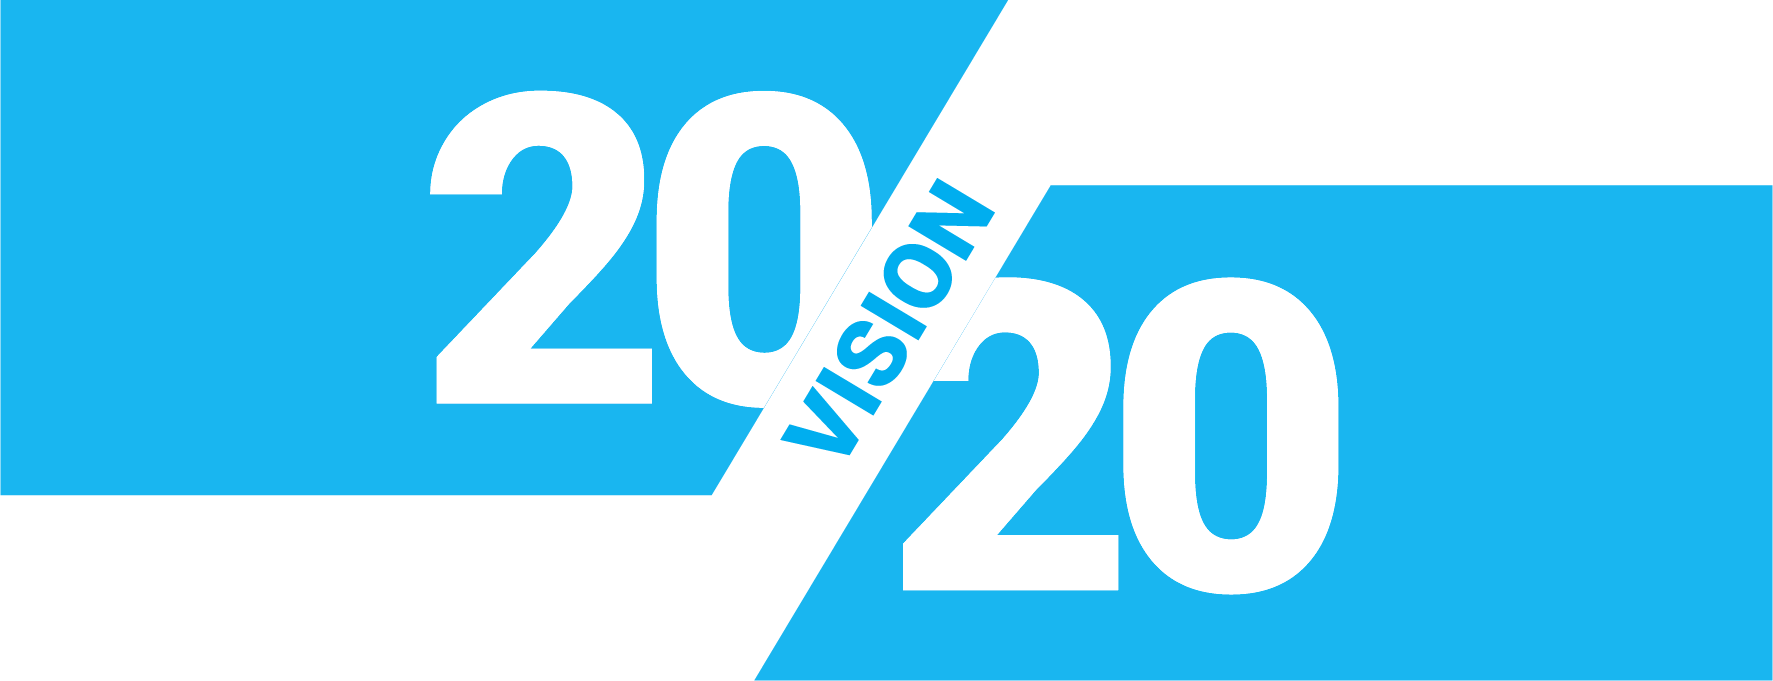 2020-vision